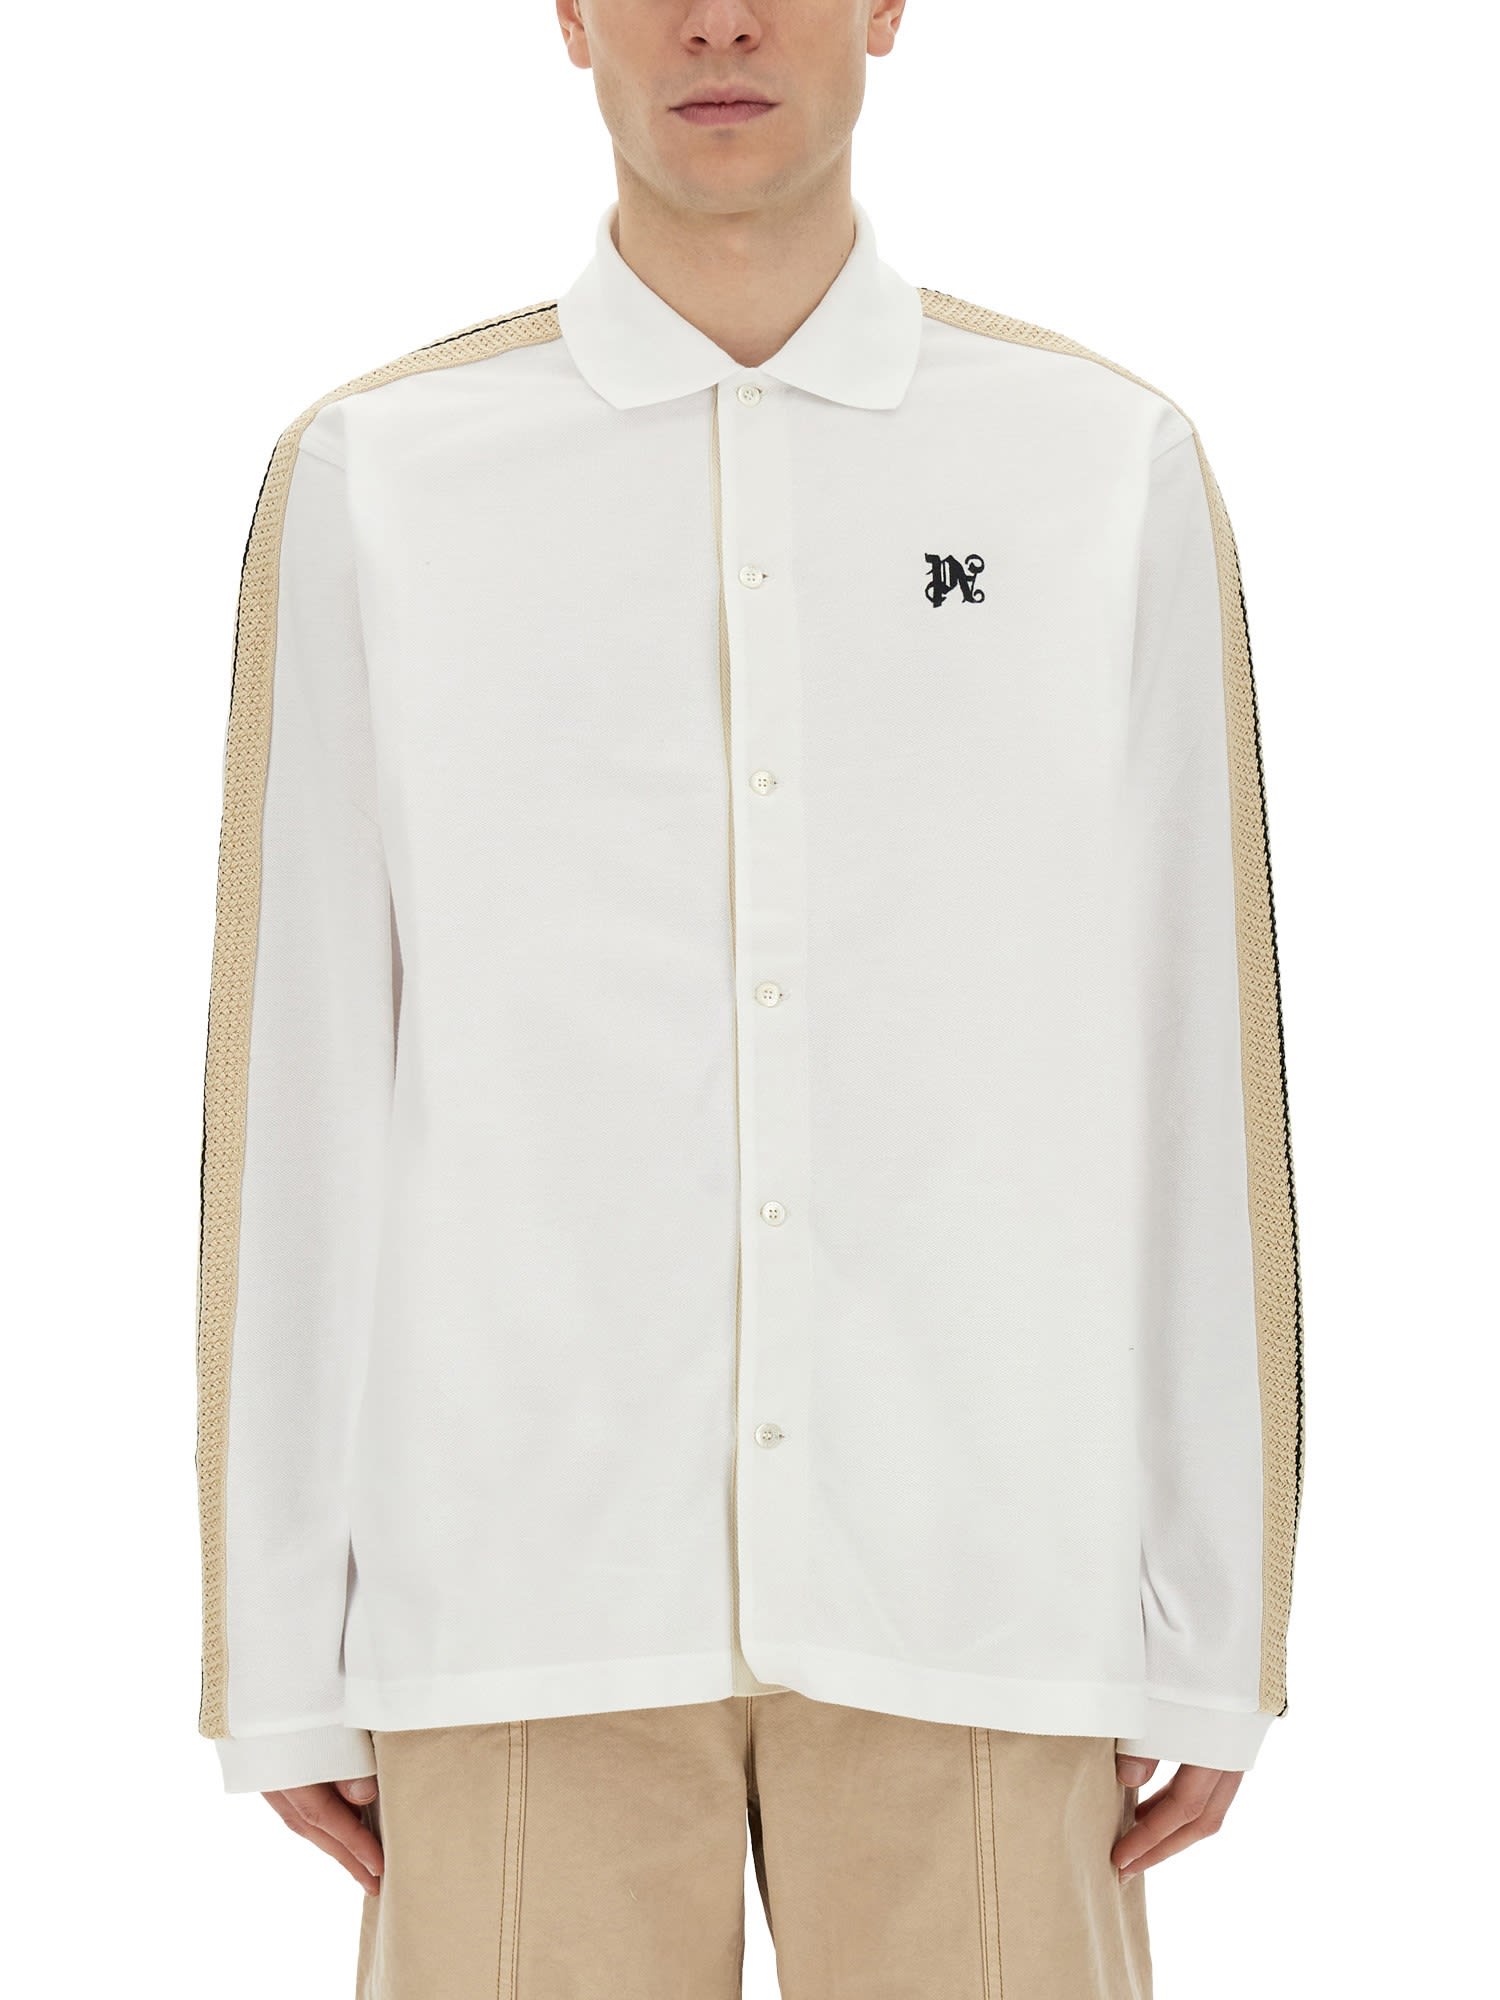 Polo Shirt With Monogram